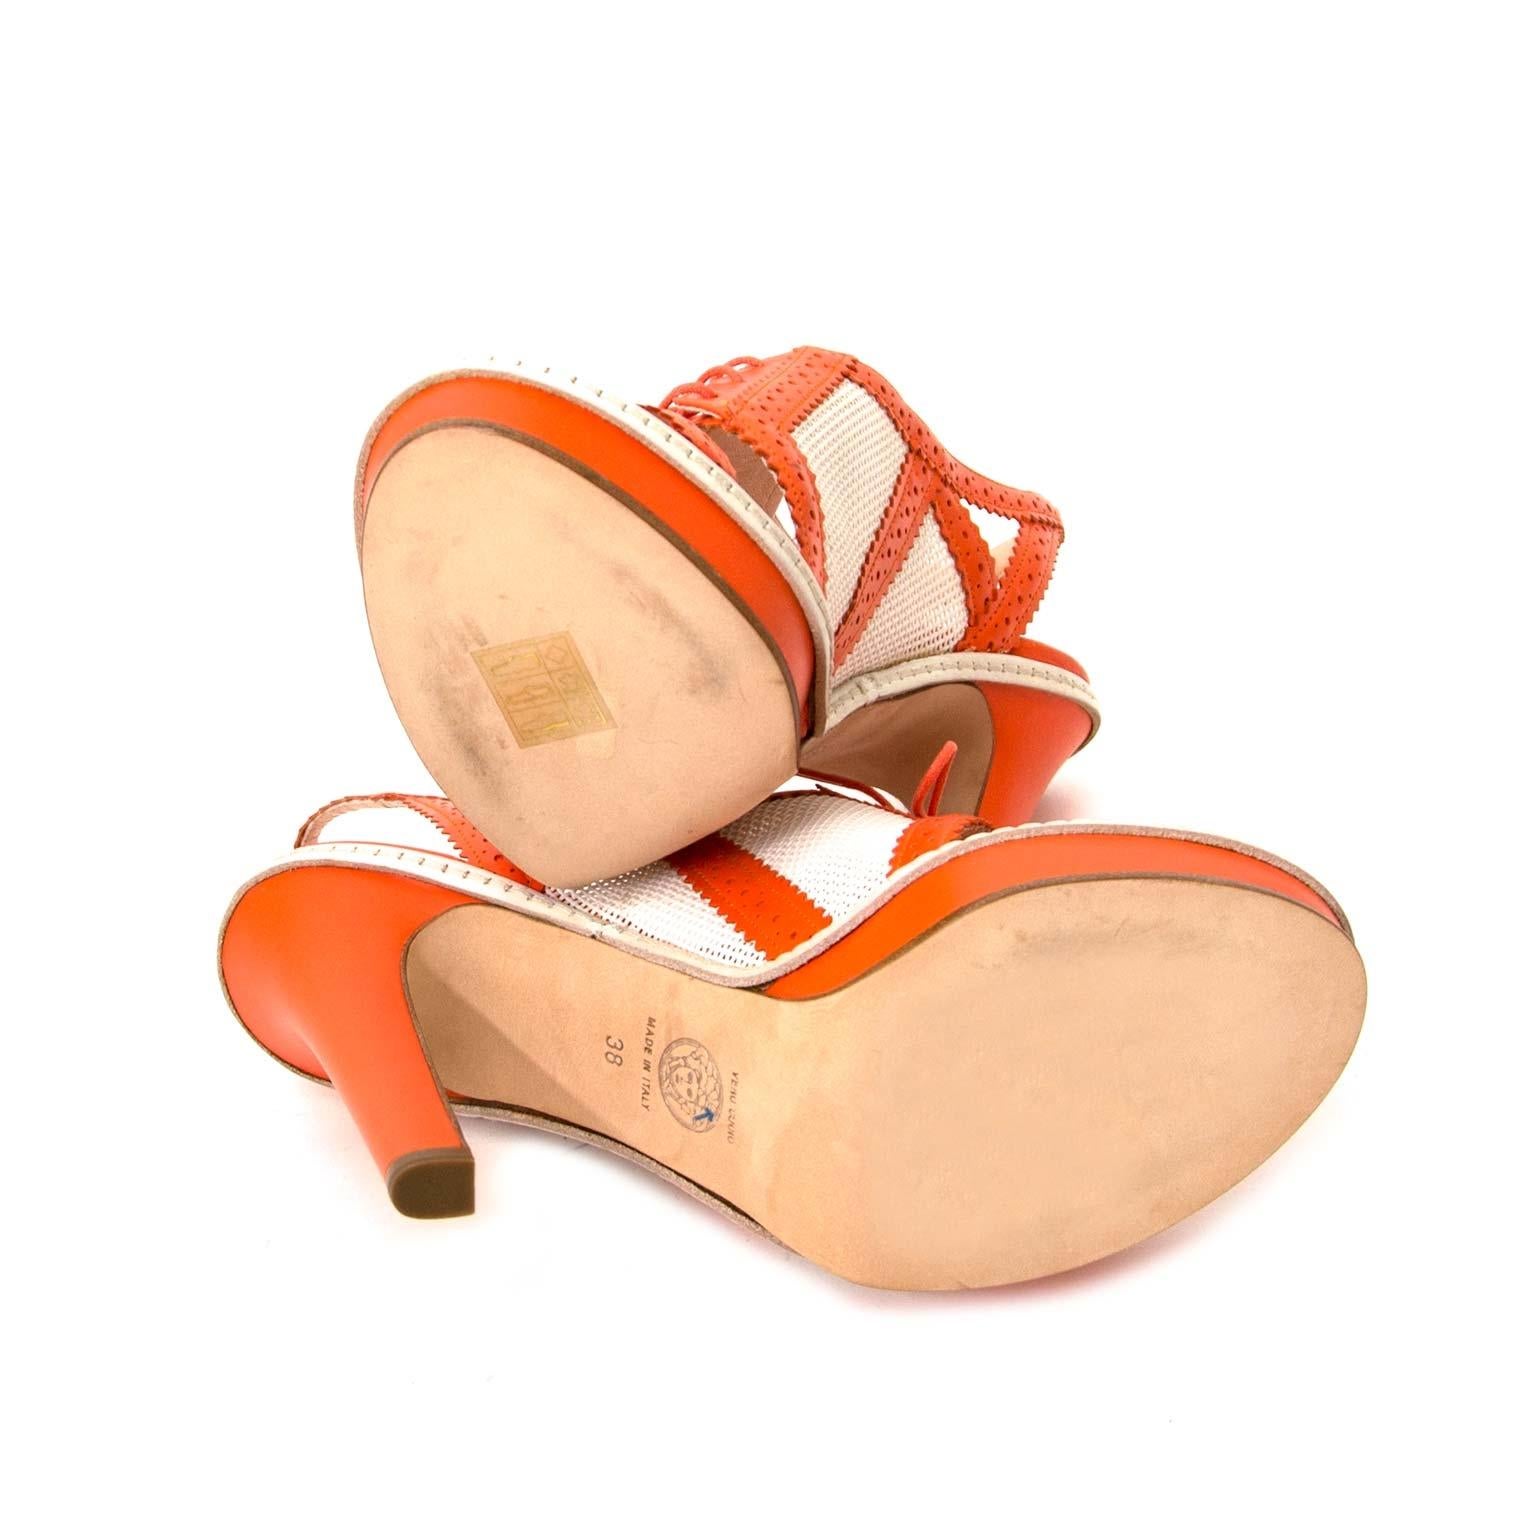 white and orange heels